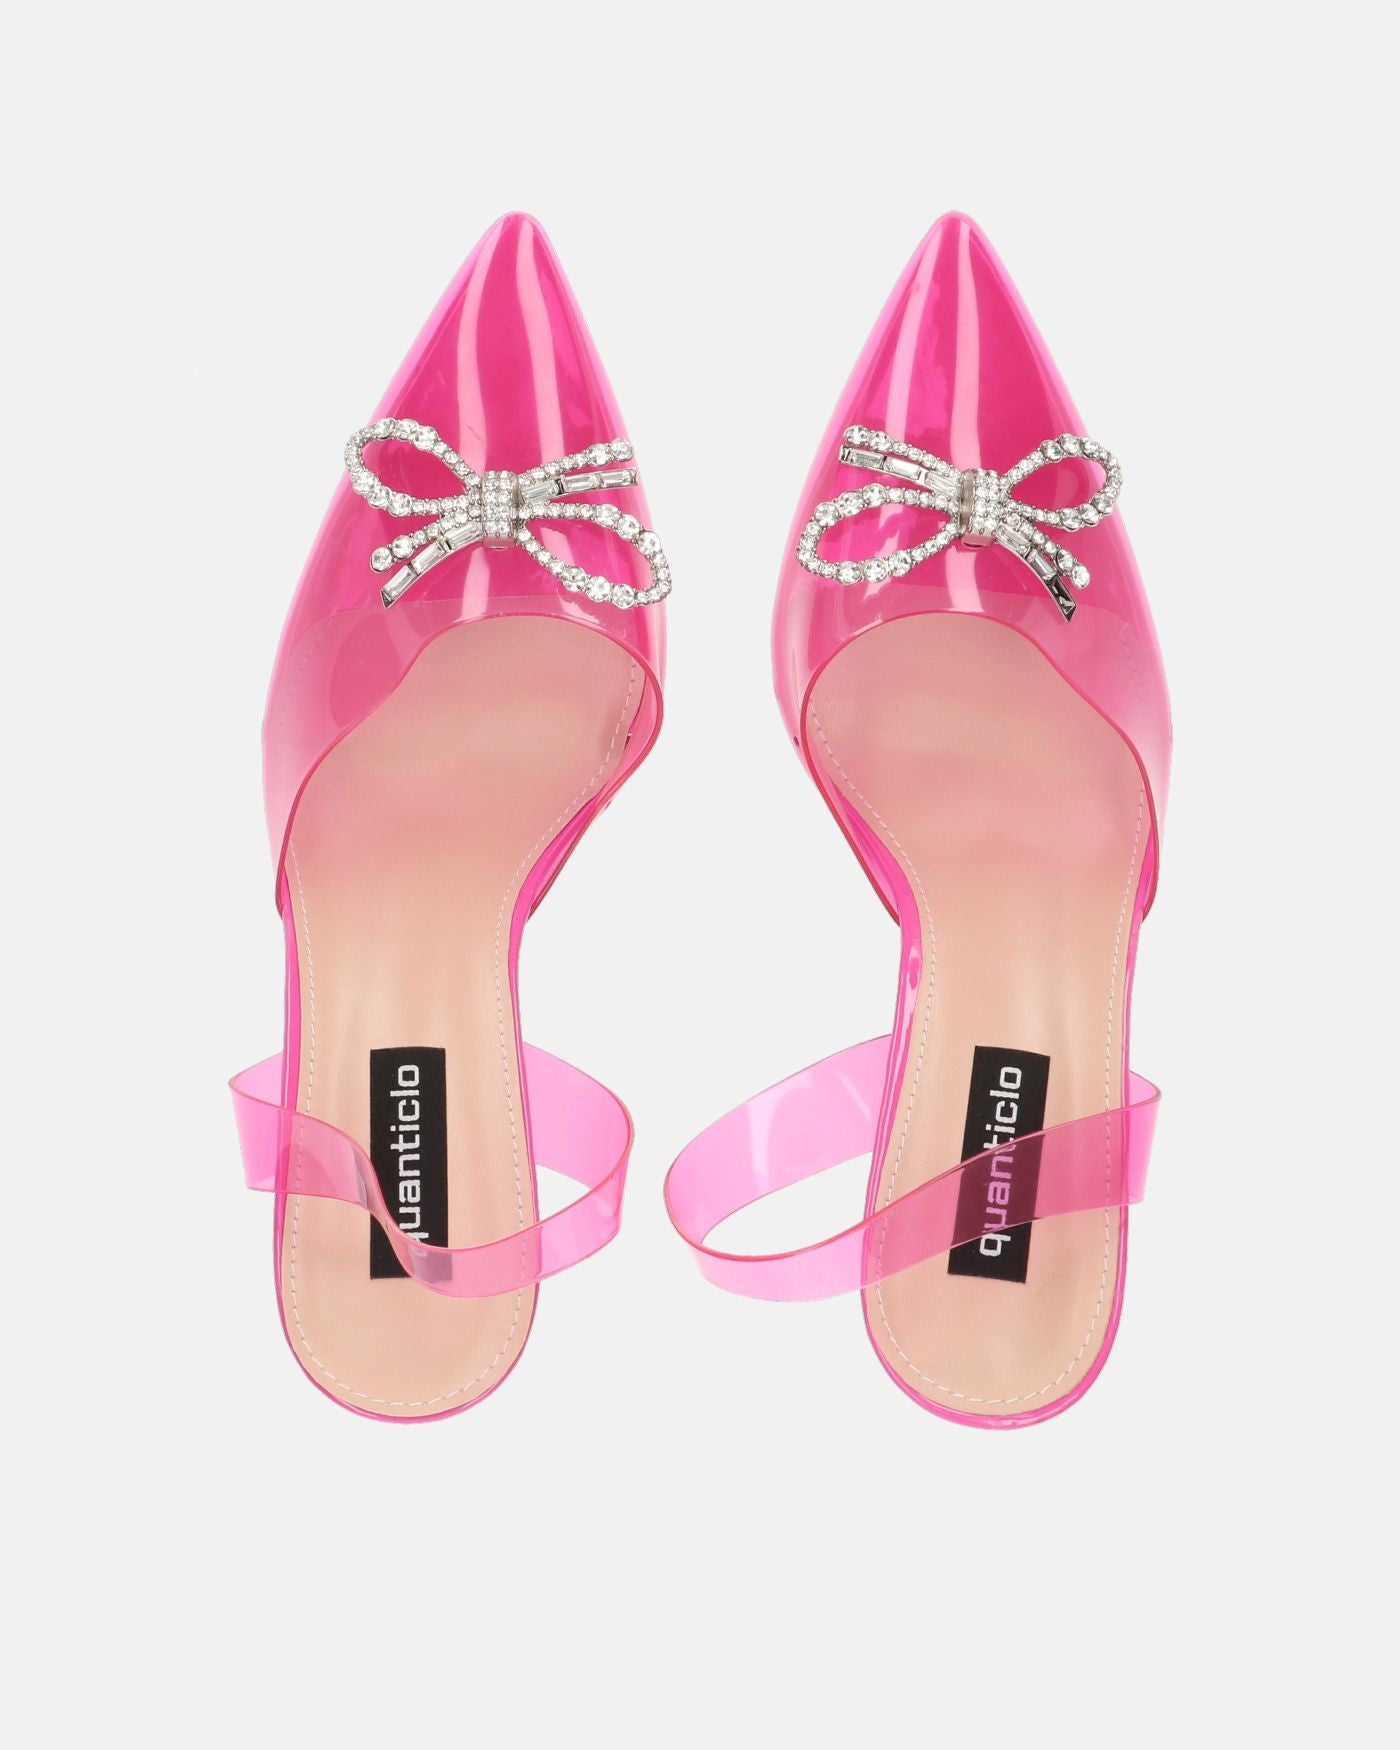 CONSUELO - fuchsia perspex heels with toe decorations